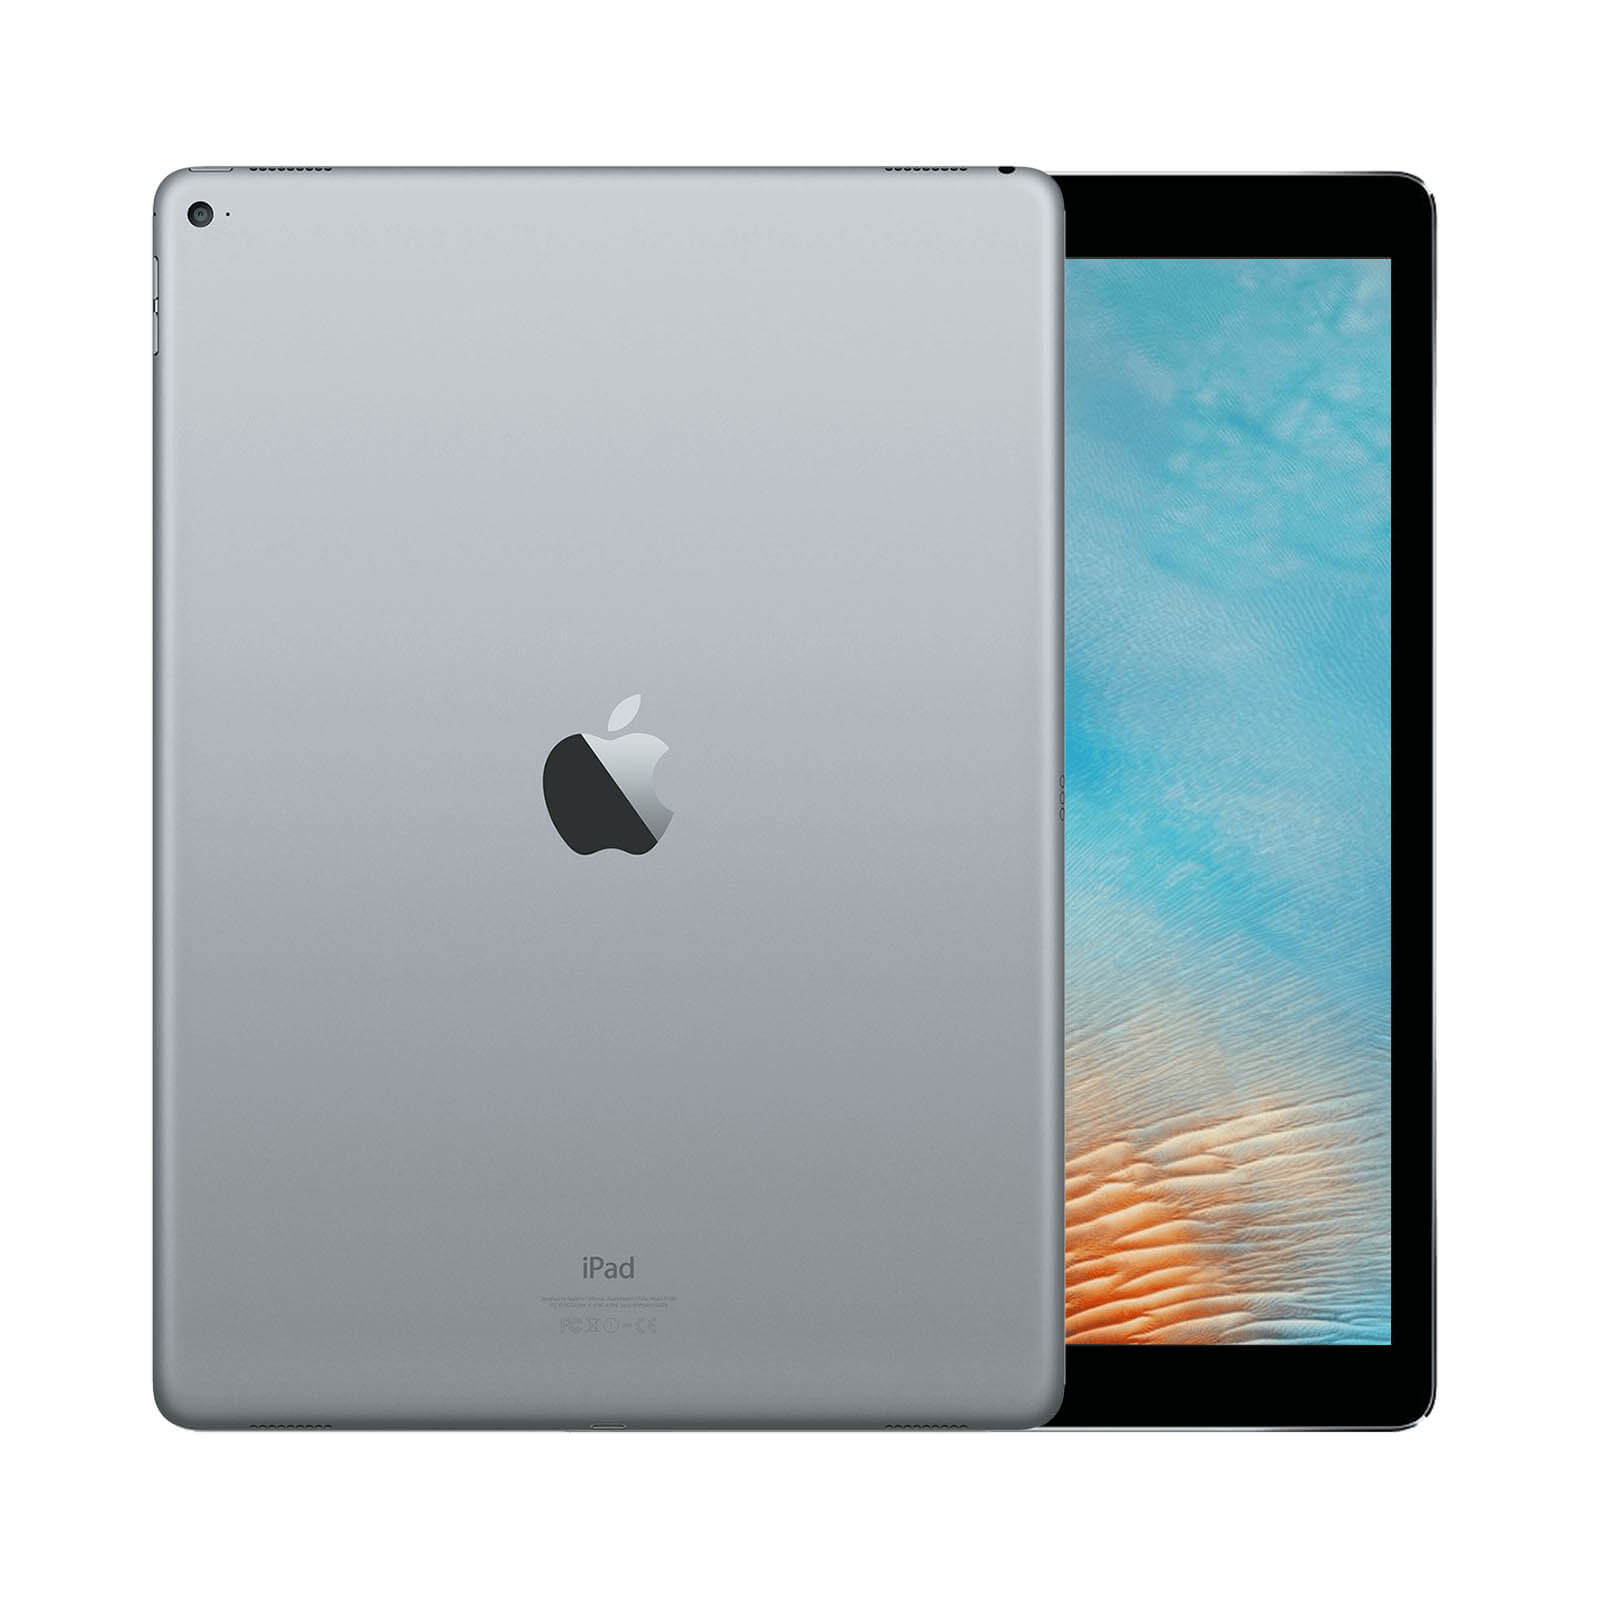 iPad Pro 12.9 Inch 2nd Gen 512GB Space Grey Very Good - WiFi